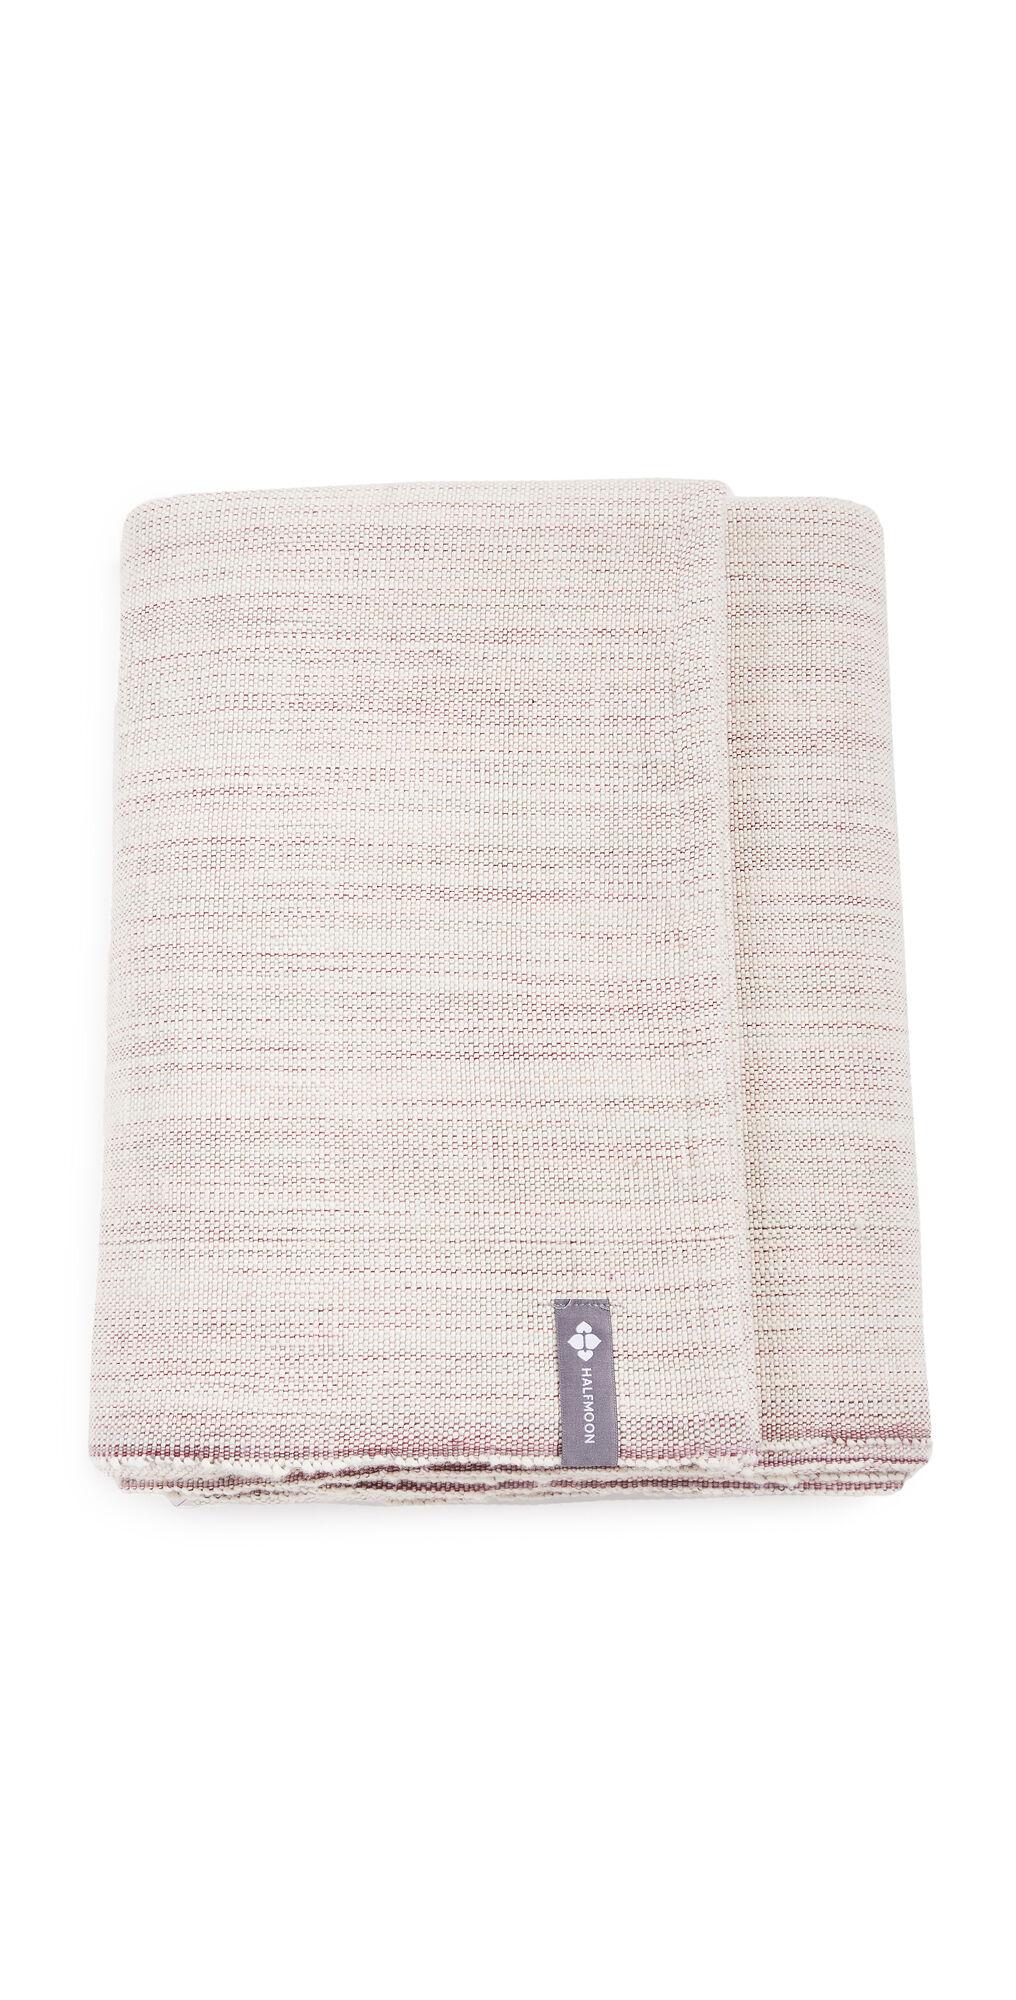 Halfmoon Yoga Melange Cotton Yoga Blanket Desert Rose One Size    size: